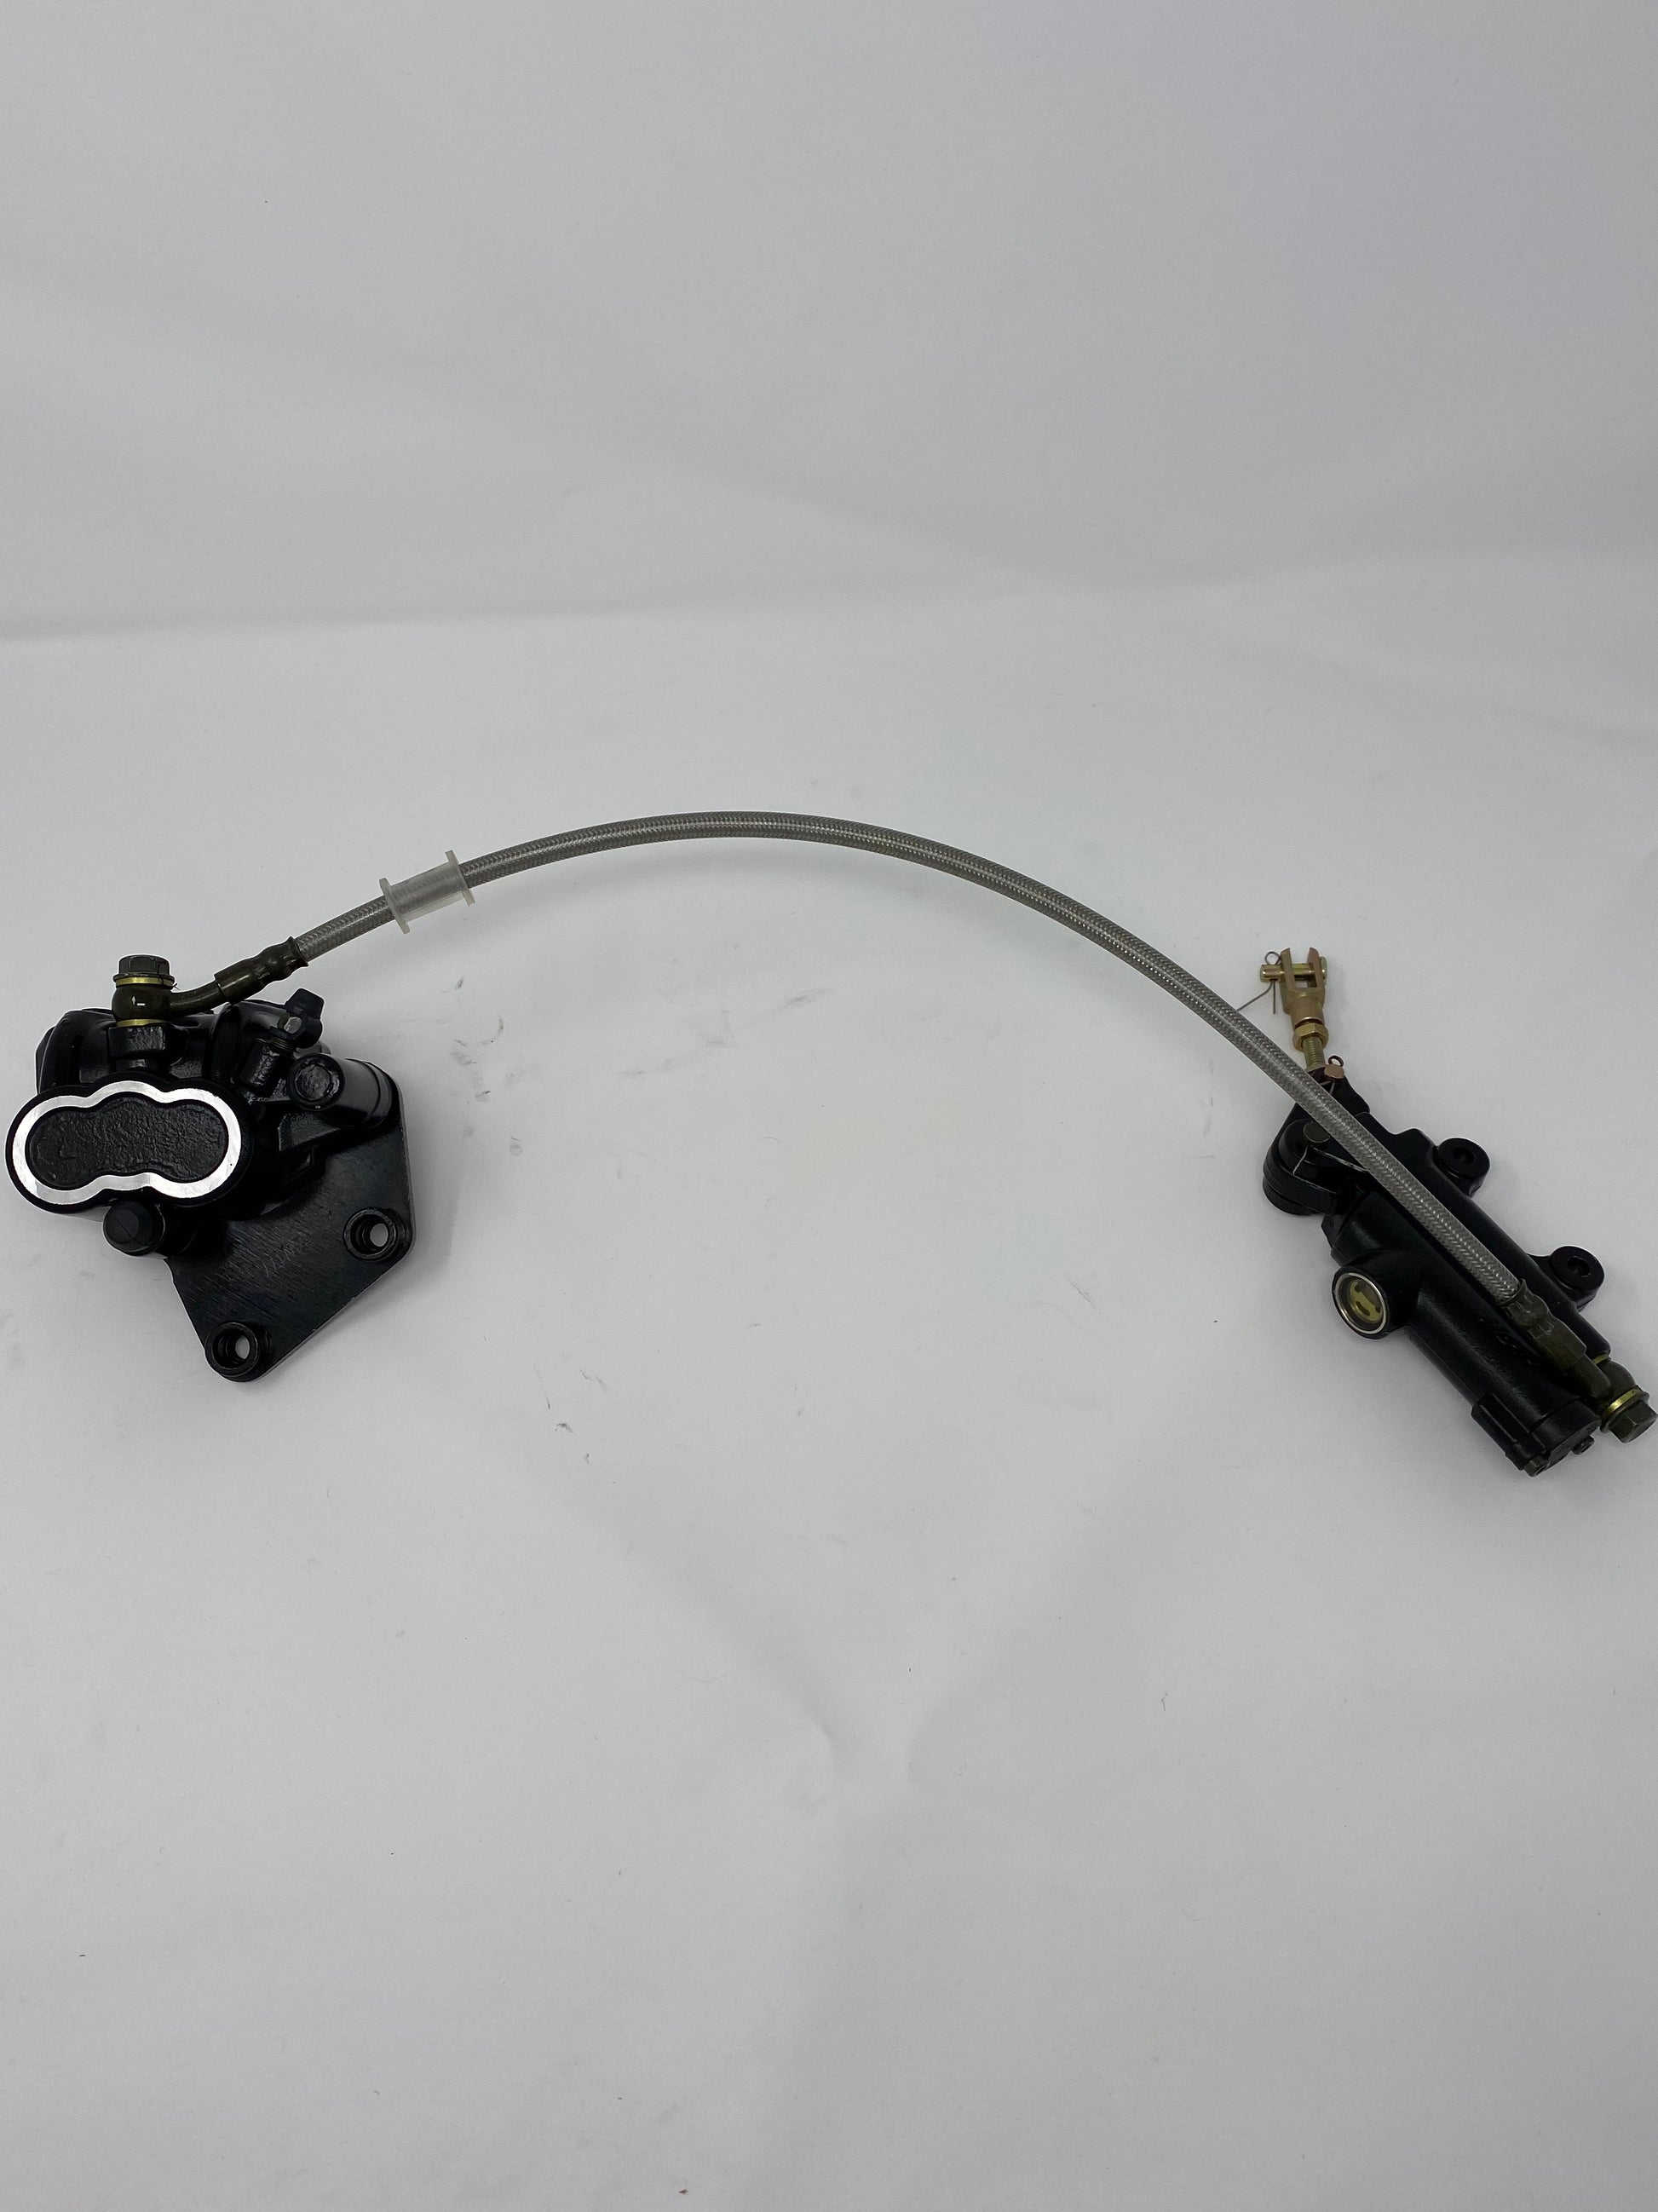 Rear disc brake assembly for BD125-11 for sale.